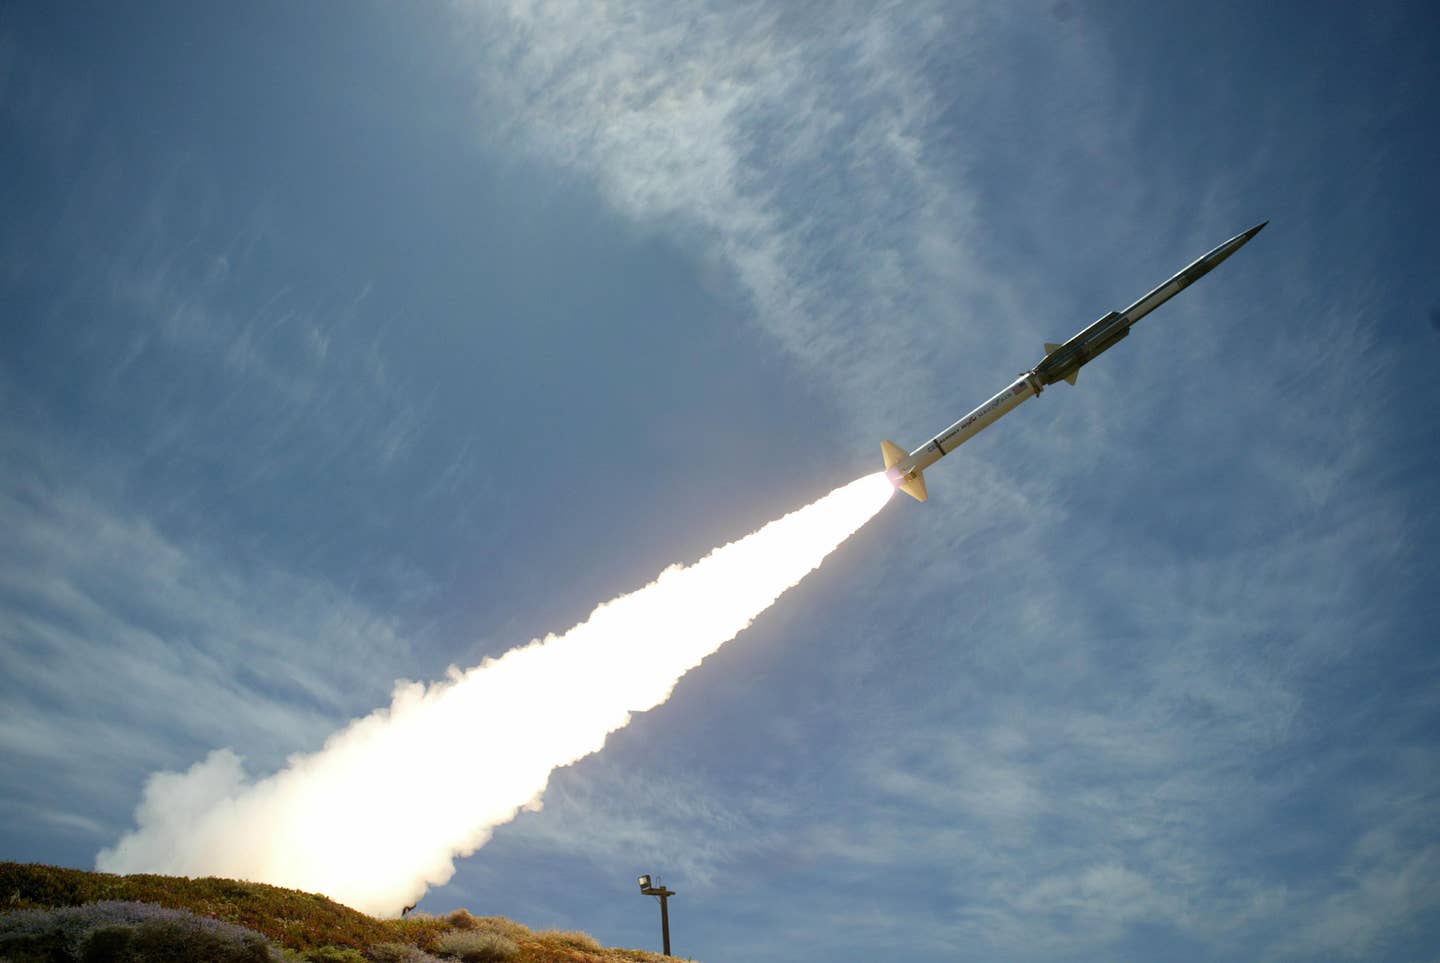 The&nbsp;<a href="https://en.wikipedia.org/wiki/GQM-163A_Coyote">GQM-163A Coyote</a>&nbsp;Supersonic Sea-Skimming Target test launch in May 2004.<em> Credit: U.S. Navy</em>